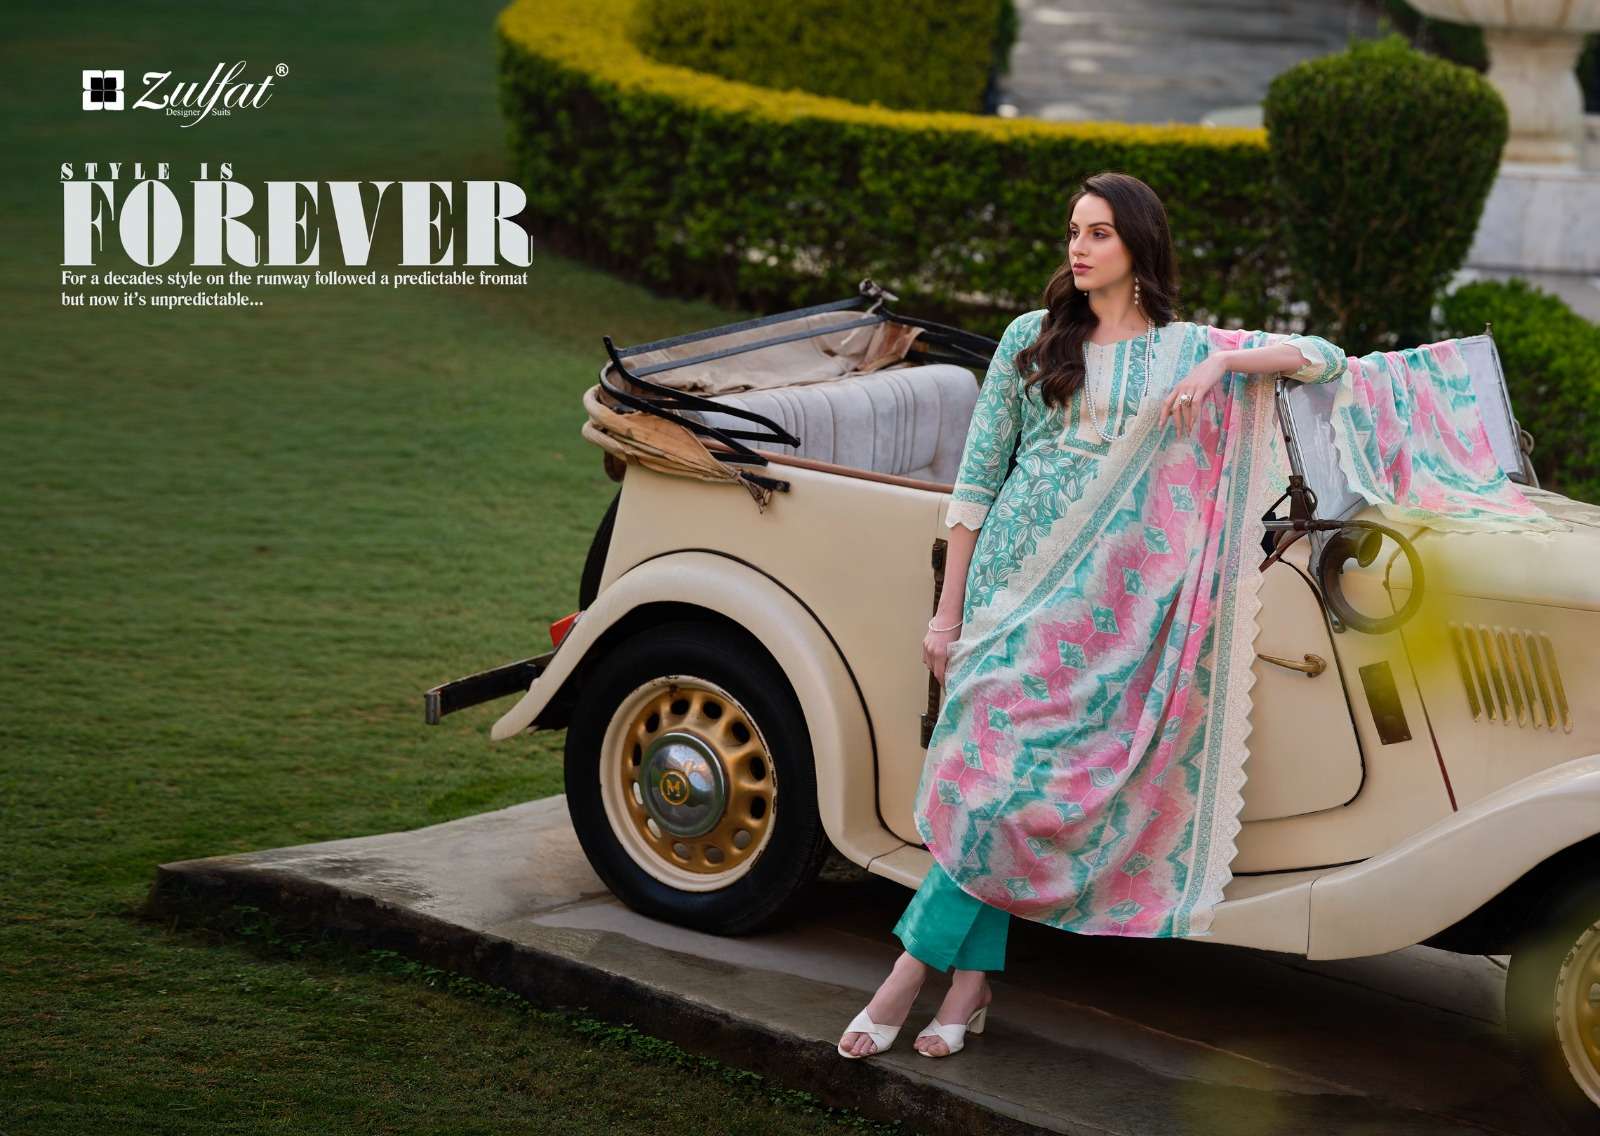 zulfat designer suits farhana vol 2 cotton exclusive print salwar suit catalog